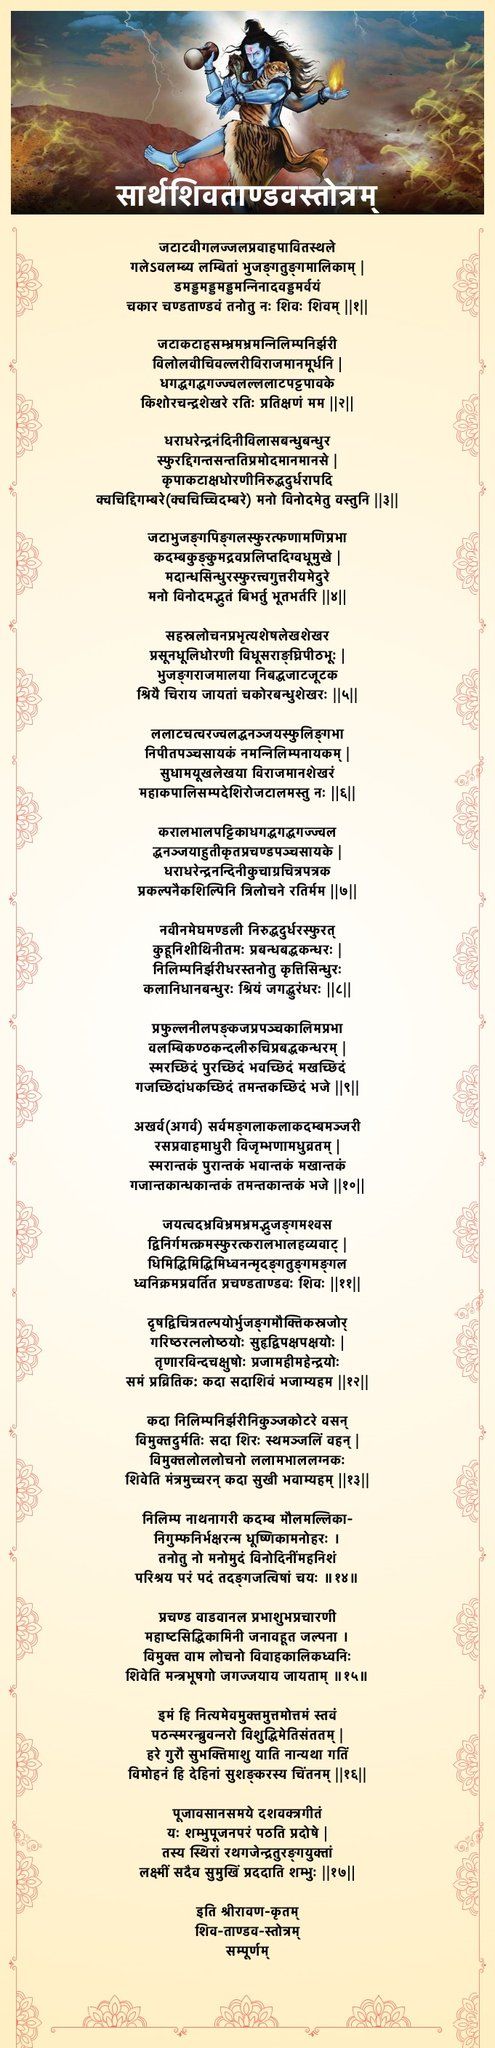 Shiv Tandav Stotram Lyrics and Importance You Shouldn’t MissHD Wallpaper